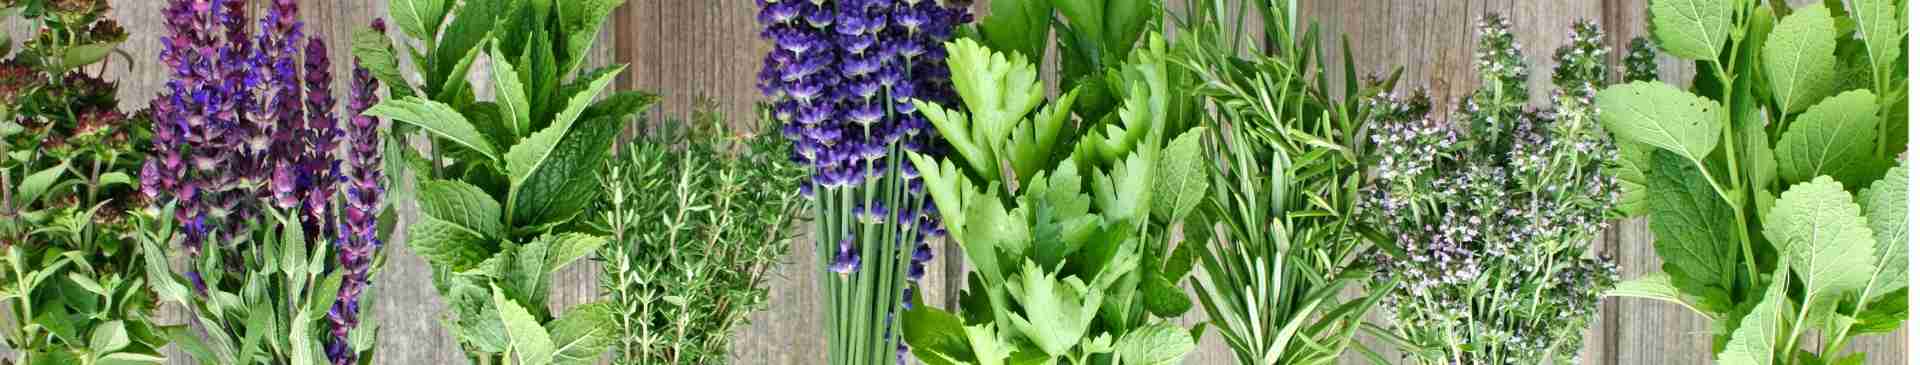 5 Benefits of Starting a Herb Garden